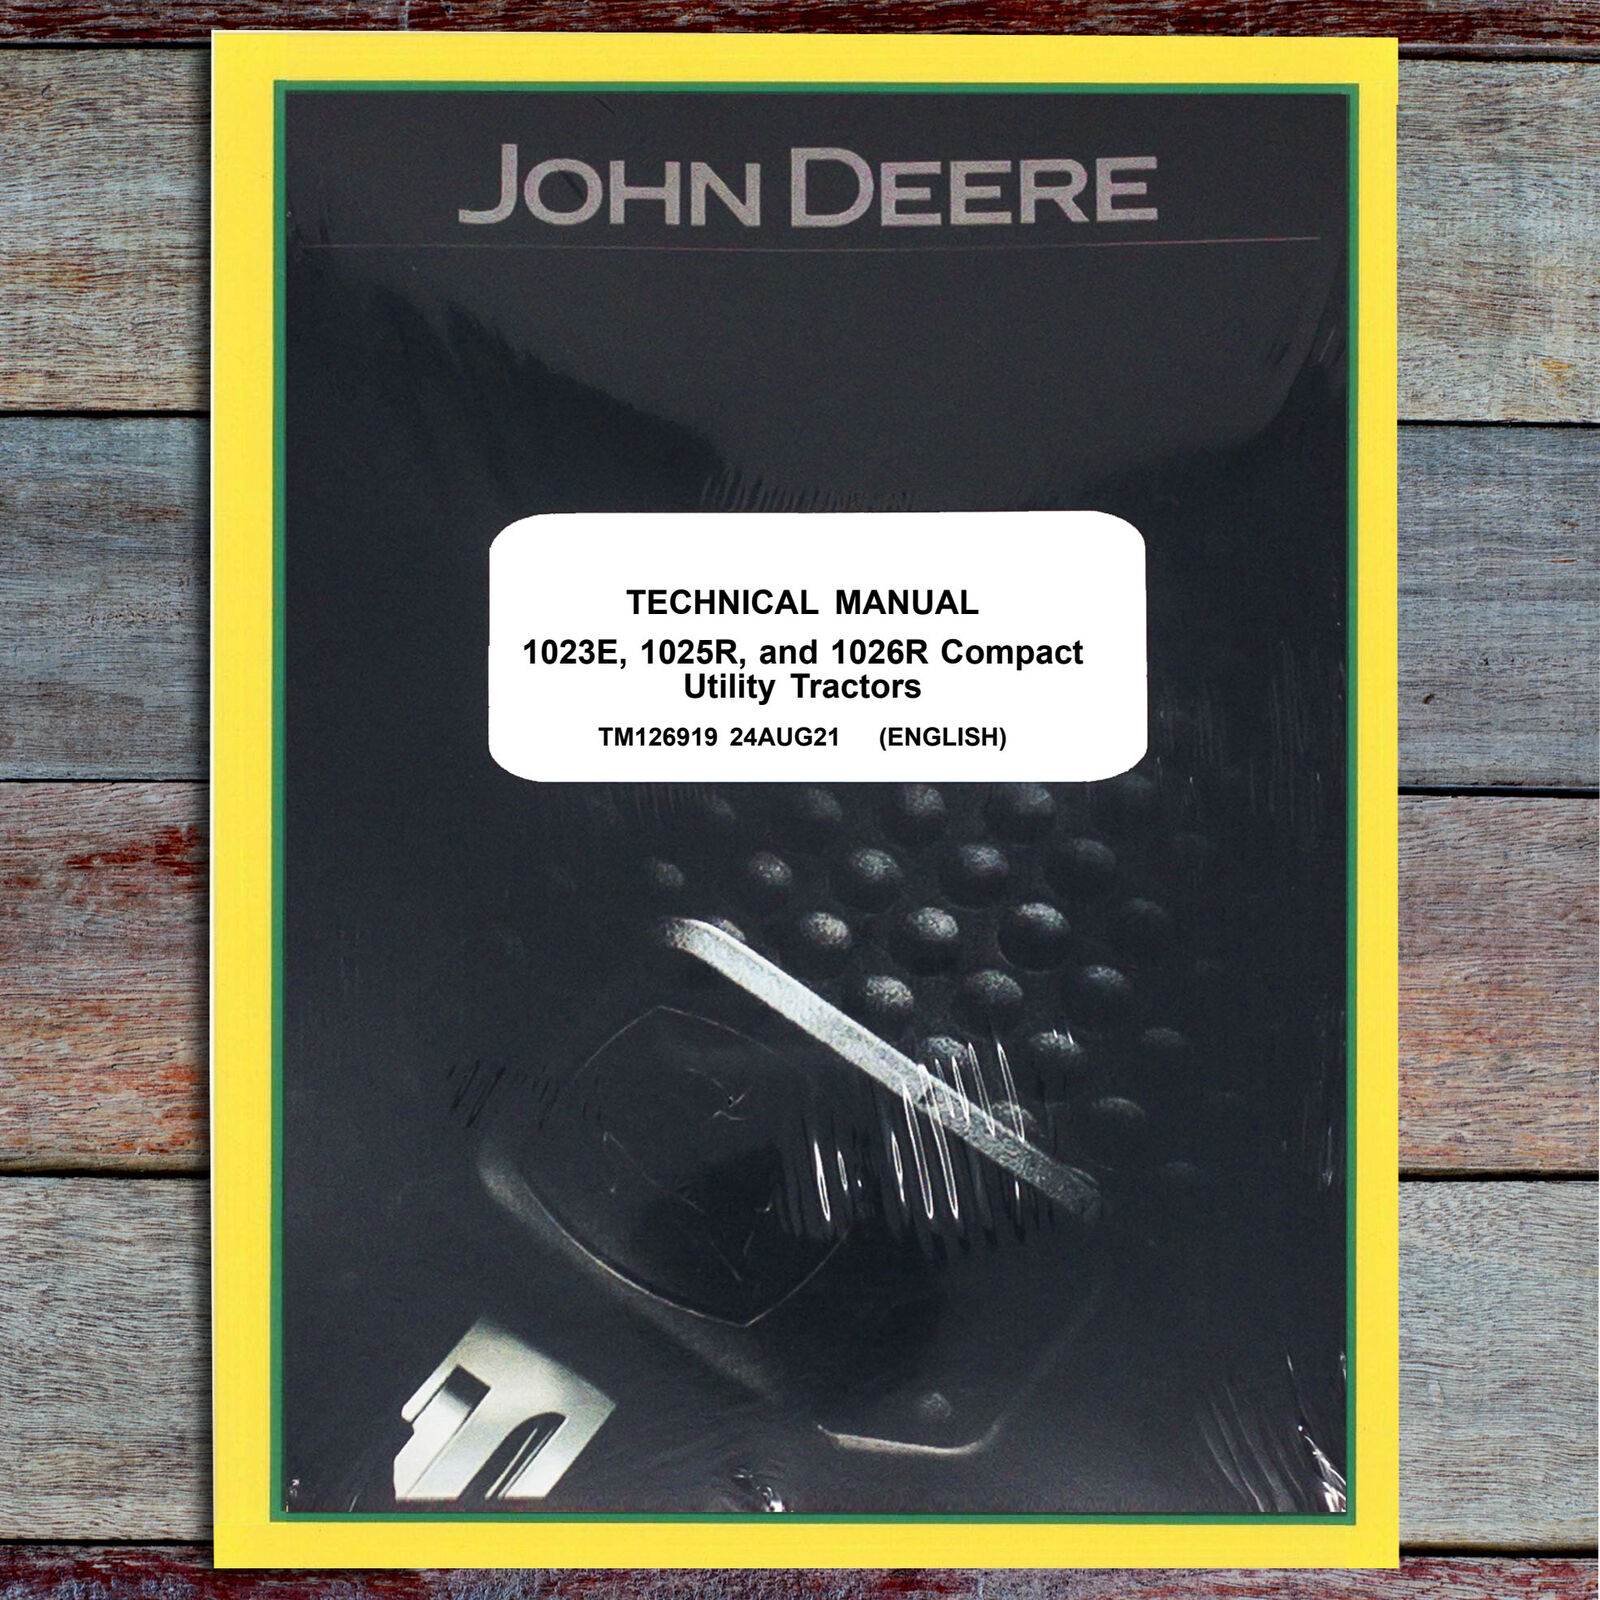 John Deere 1023E 1025R 1026R Utility Tractor Service Technical Manual - TM126919